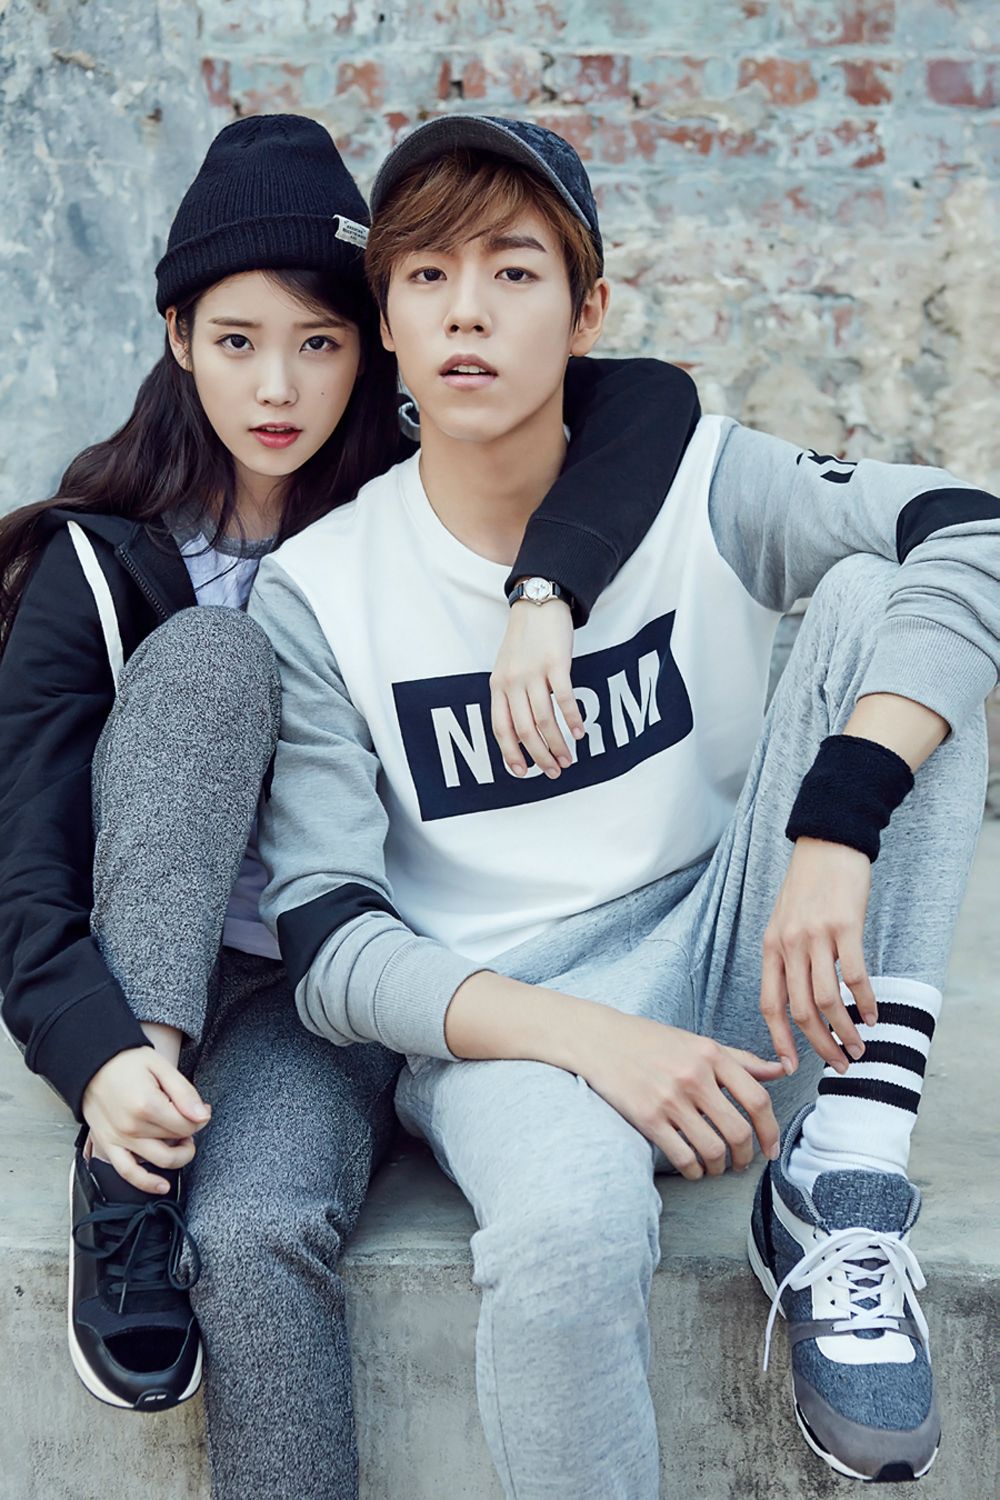 [hq] Iu & Lee Hyun Woo For Unionbay - Jackson Wang And Lisa , HD Wallpaper & Backgrounds